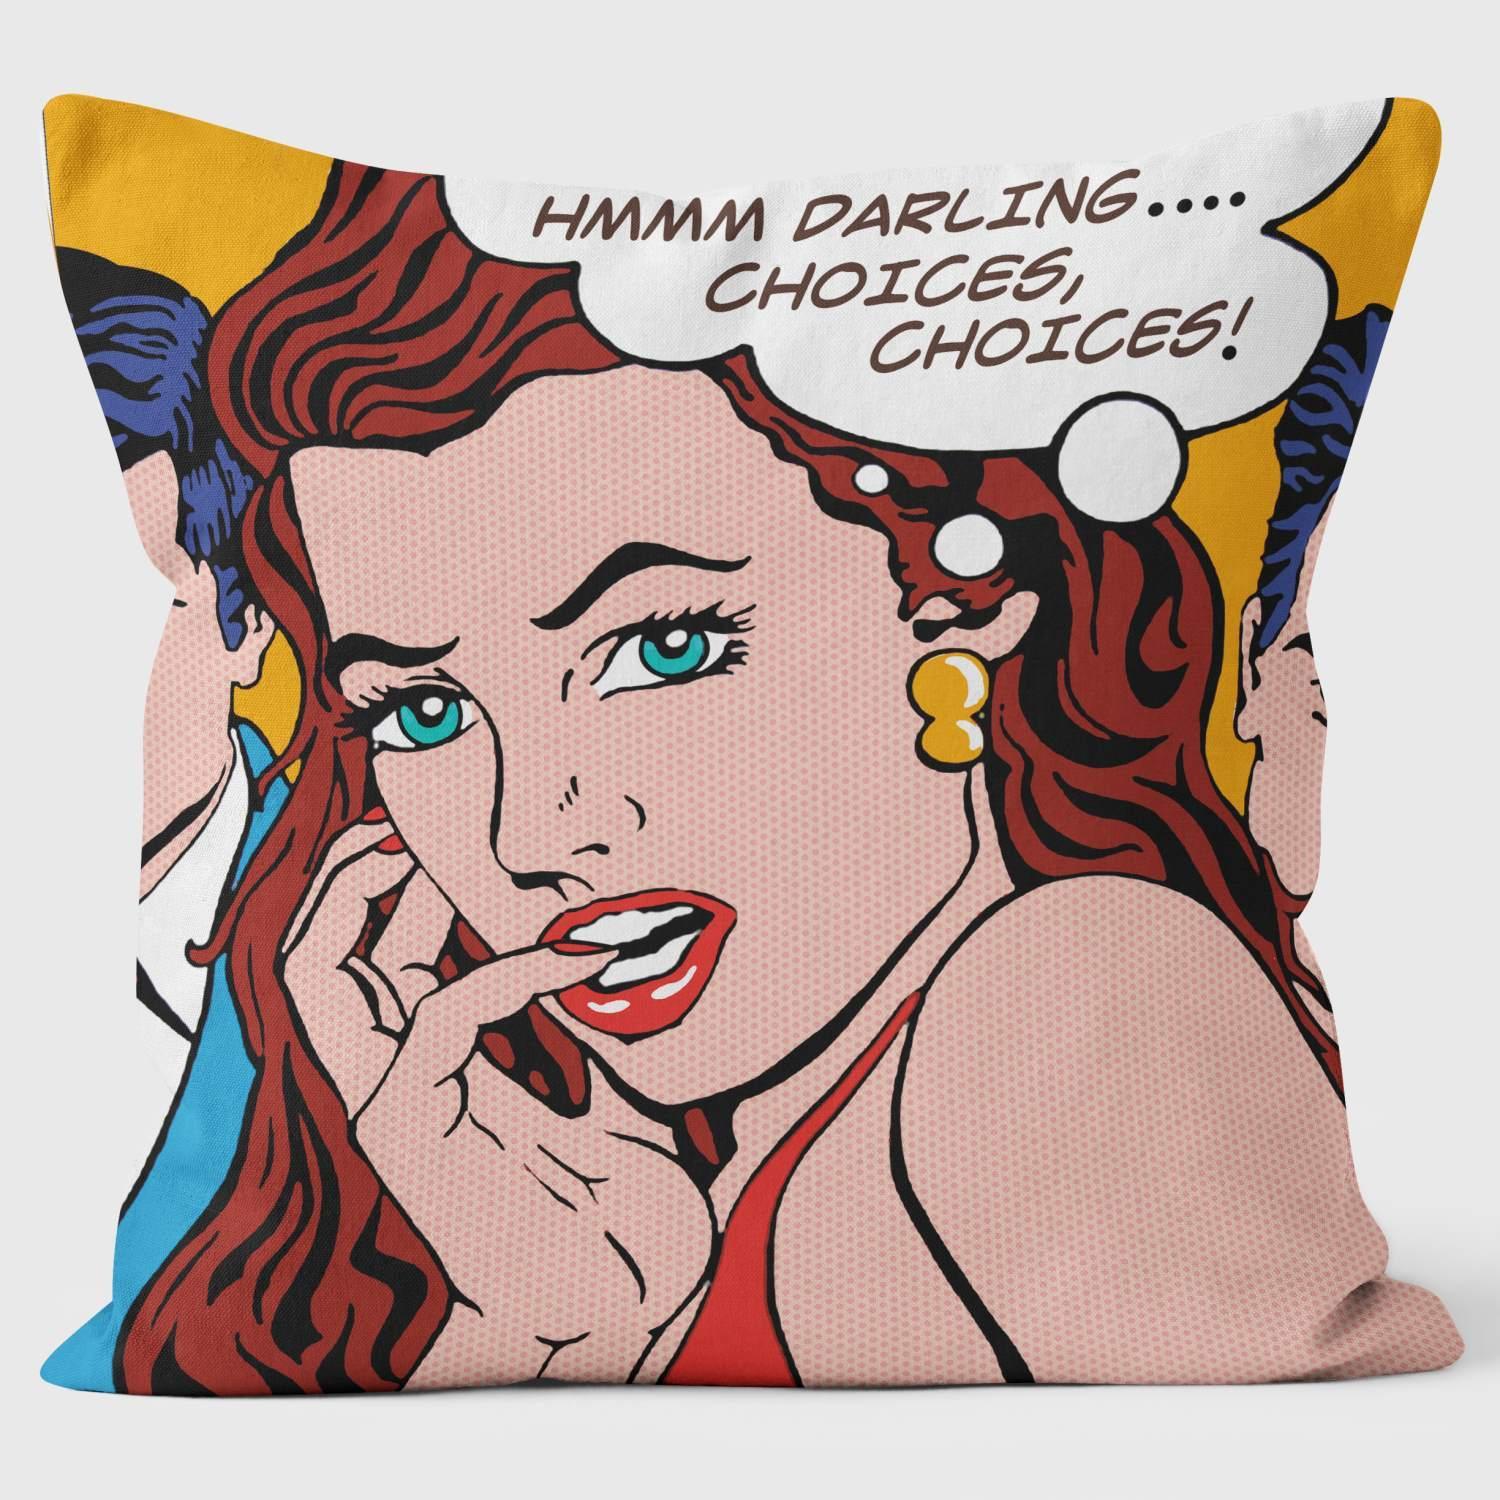 Choices -Youngerman Art Cushions - Handmade Cushions UK - WeLoveCushions